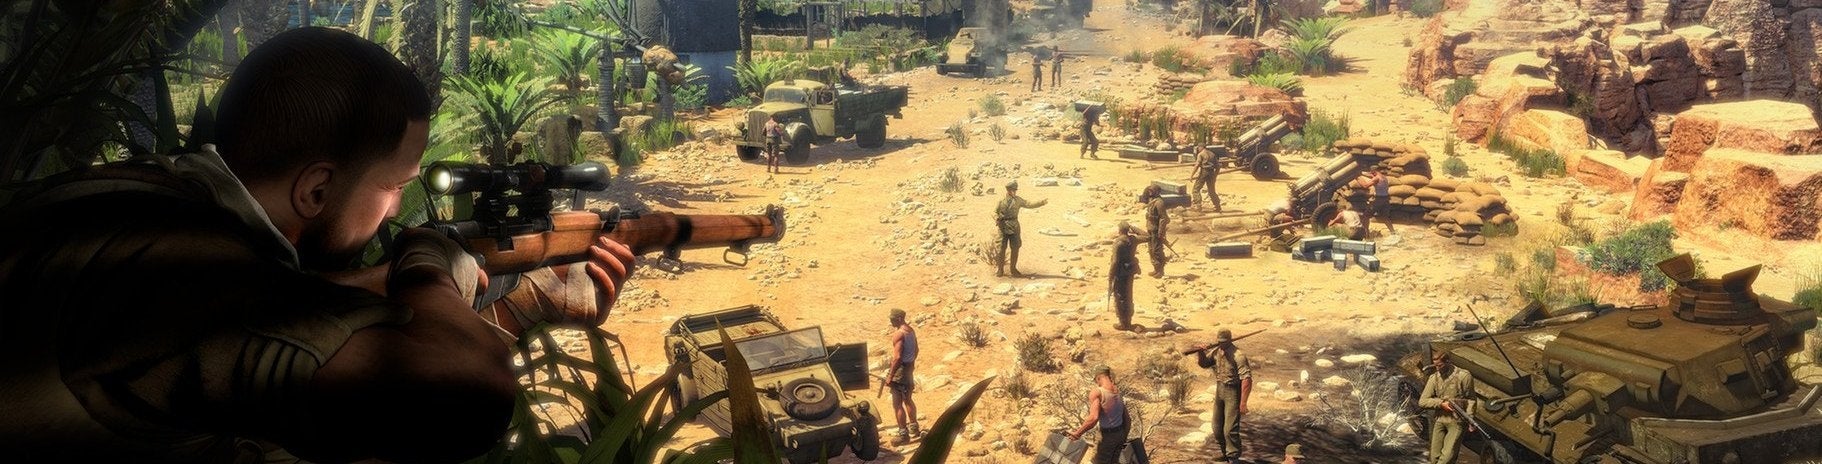 Image for Sniper Elite 3 review